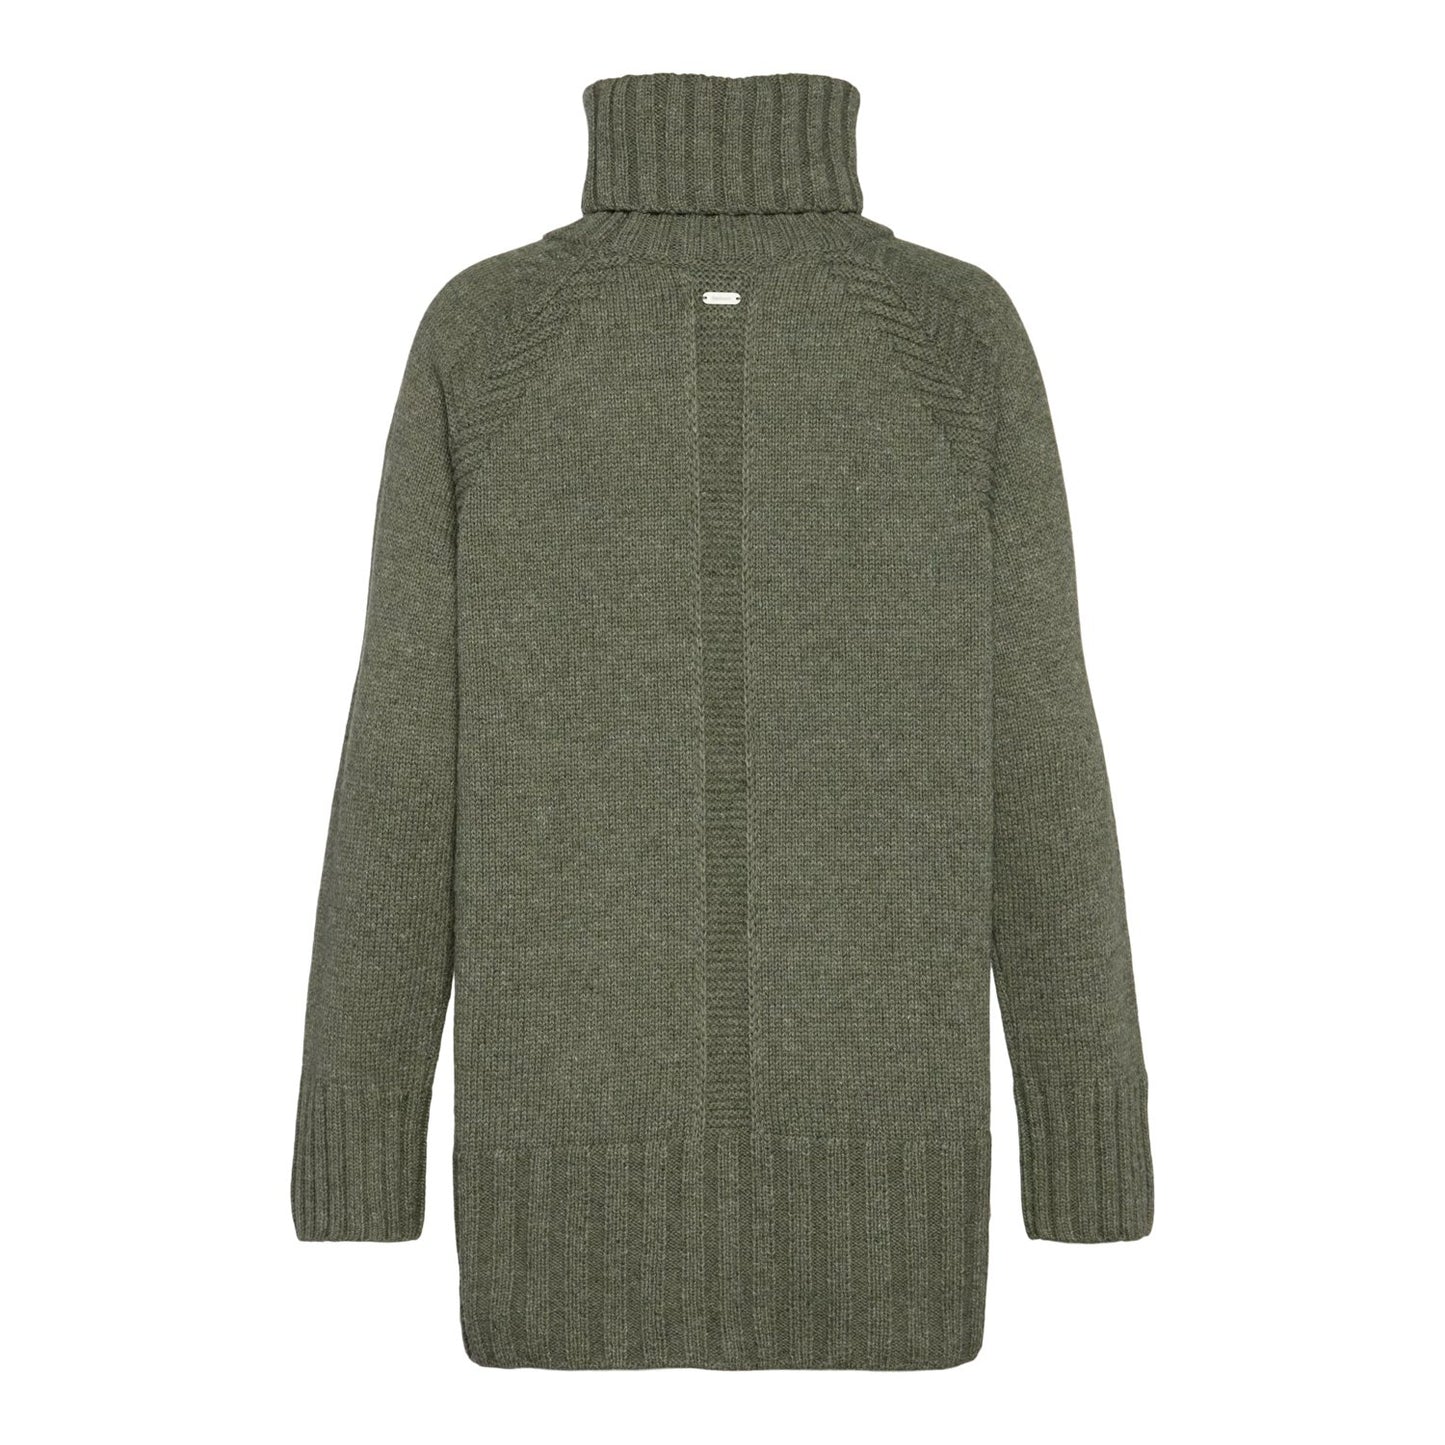 Cordelia Knit Turtleneck Sweater